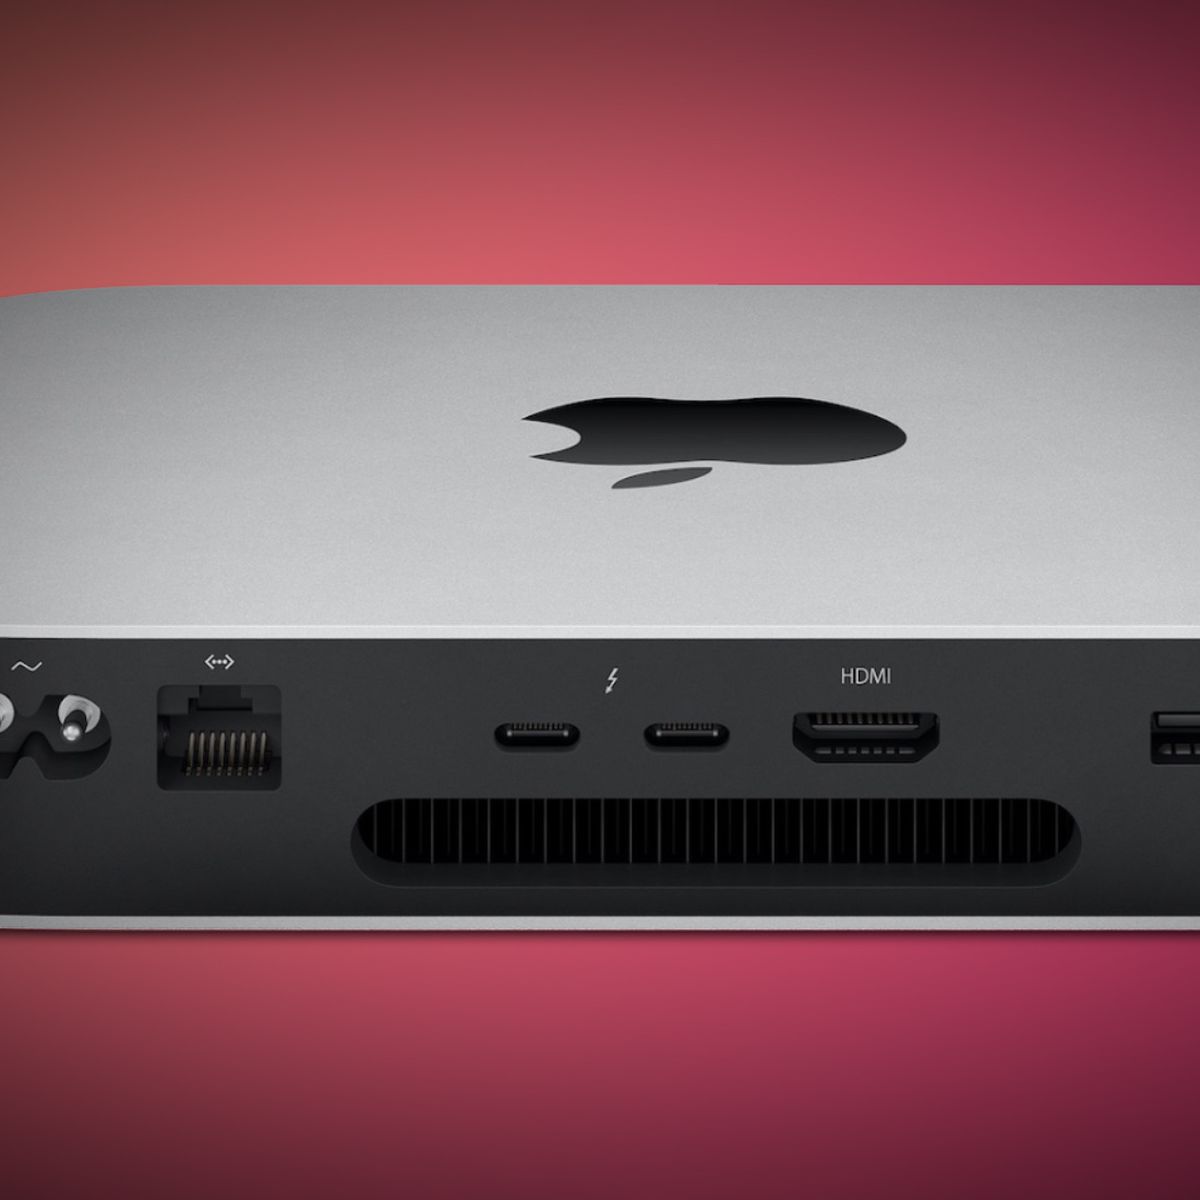 Deals: Save $100 on Apple's 2020 M1 Mac Mini, Starting at $599.99